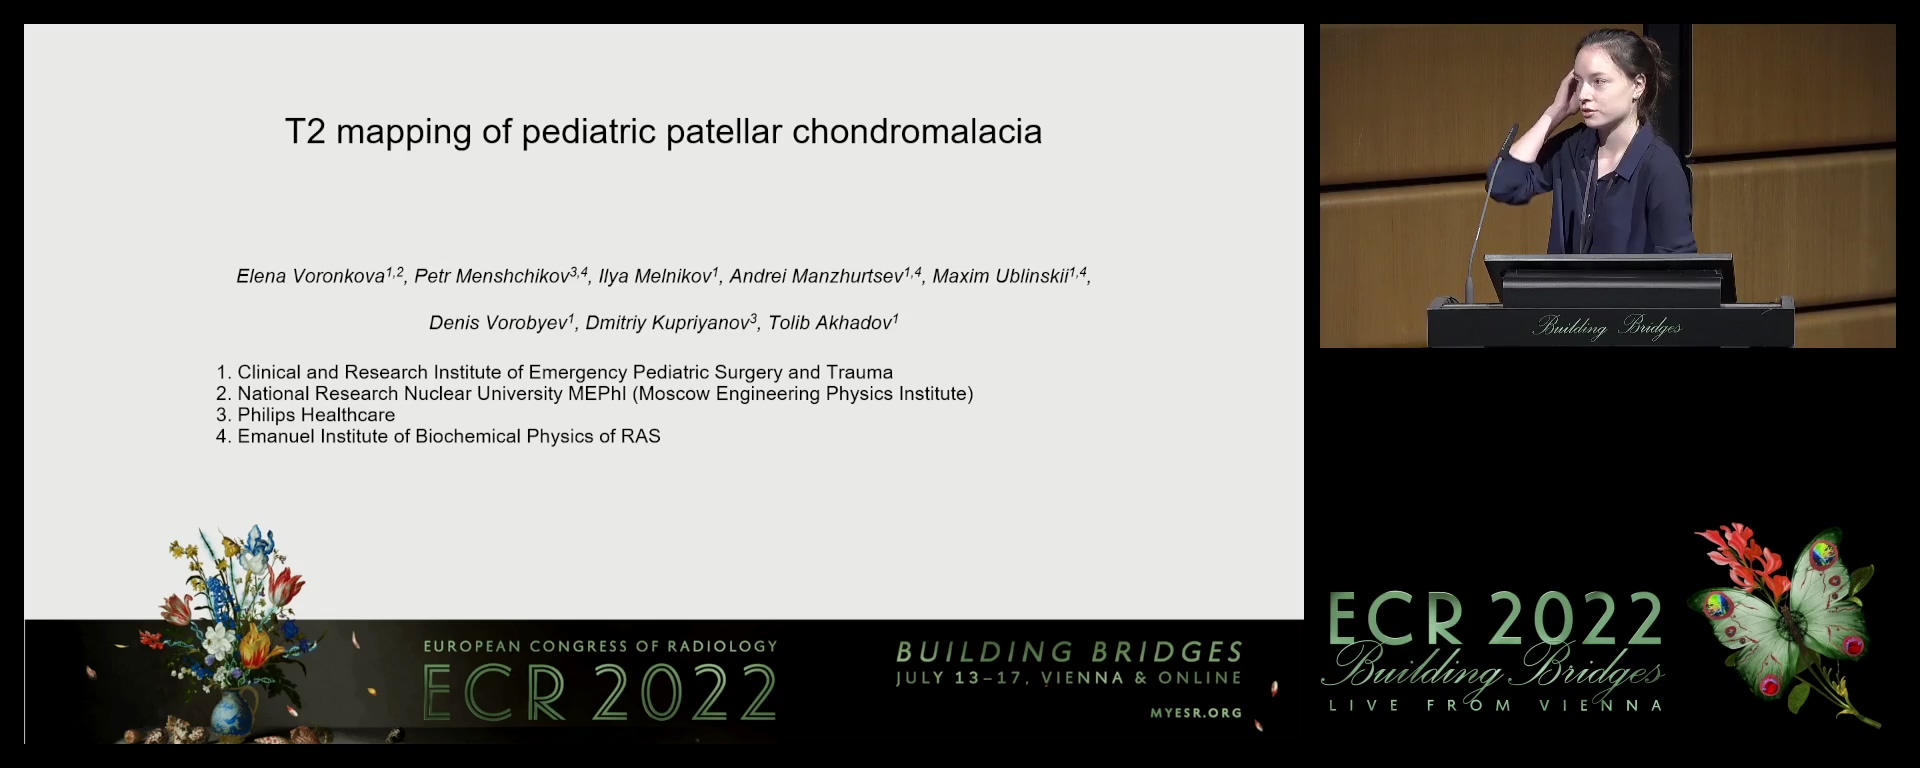 T2 mapping of paediatric patellar chondromalacia